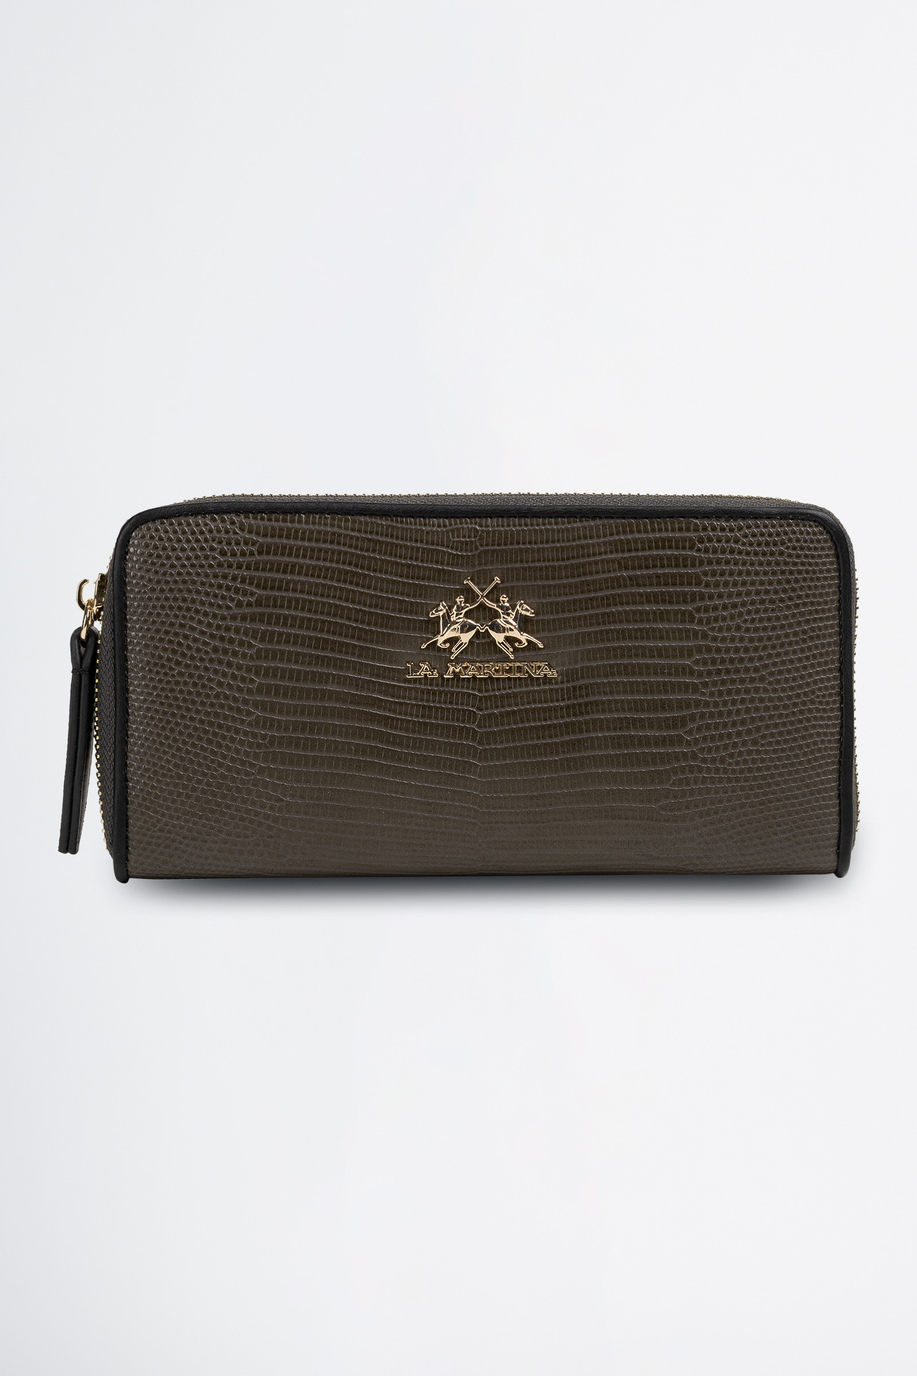 Leather wallet - Accessories | La Martina - Official Online Shop